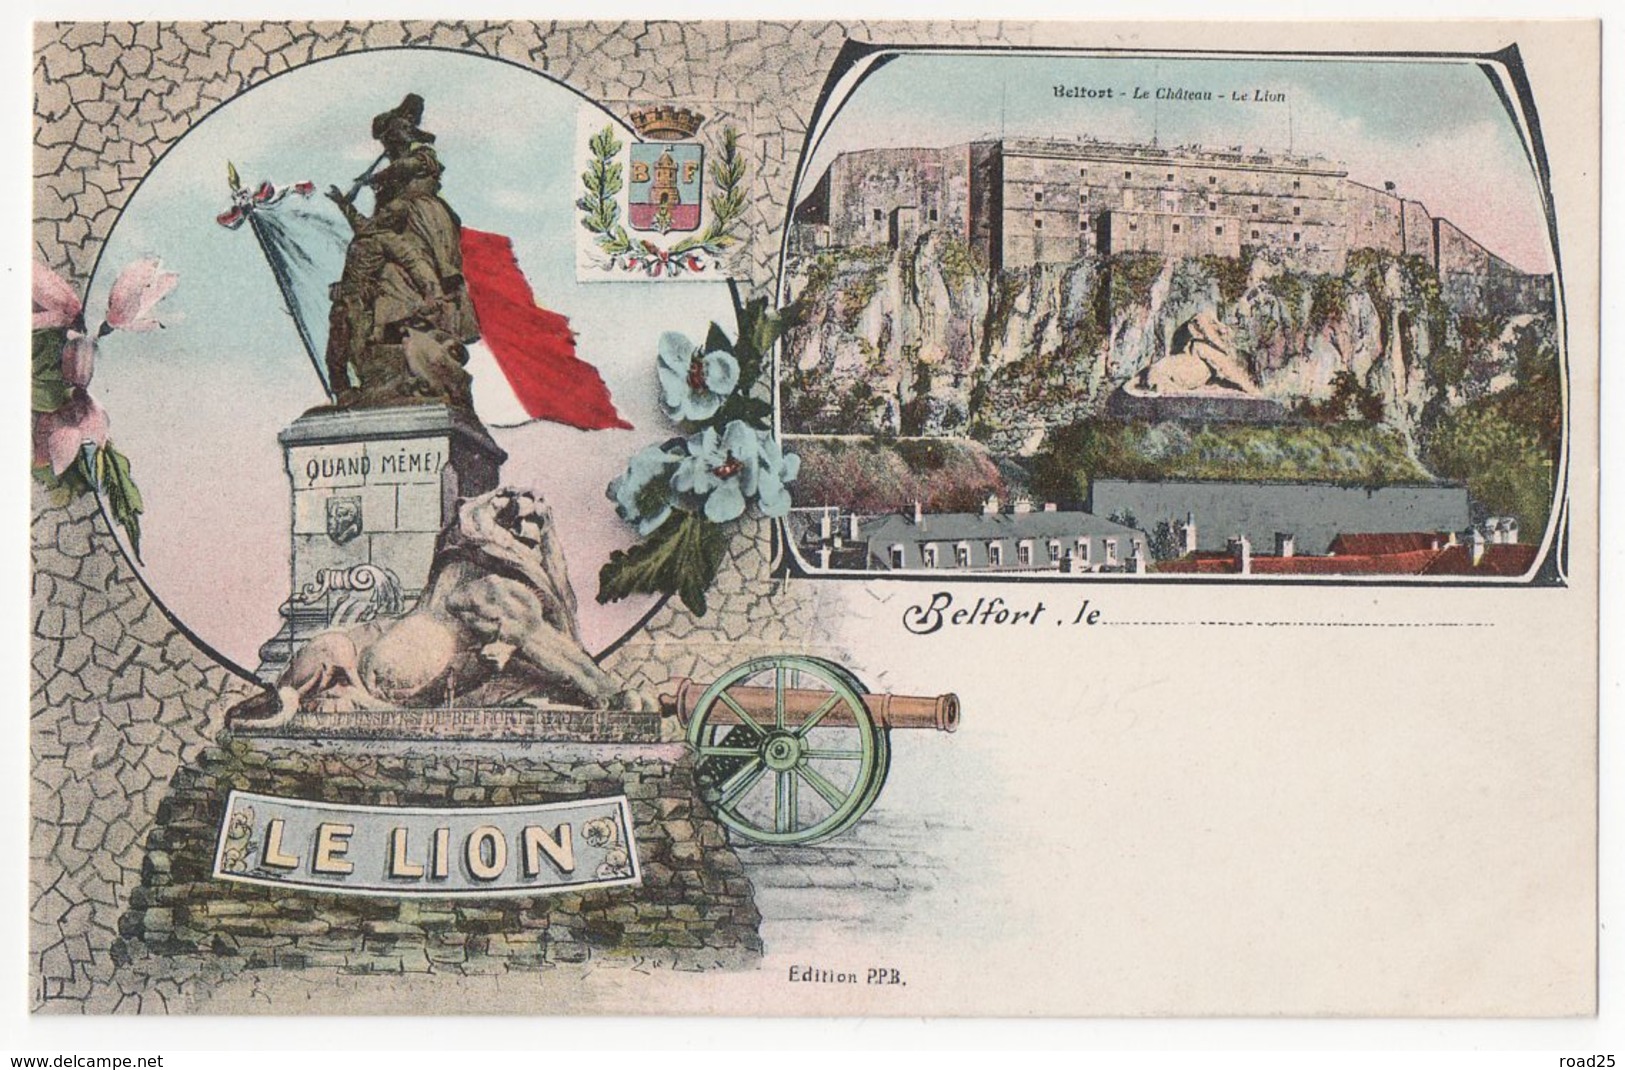 ( 90 ) Territoire de Belfort - Lot de 100 cartes postales